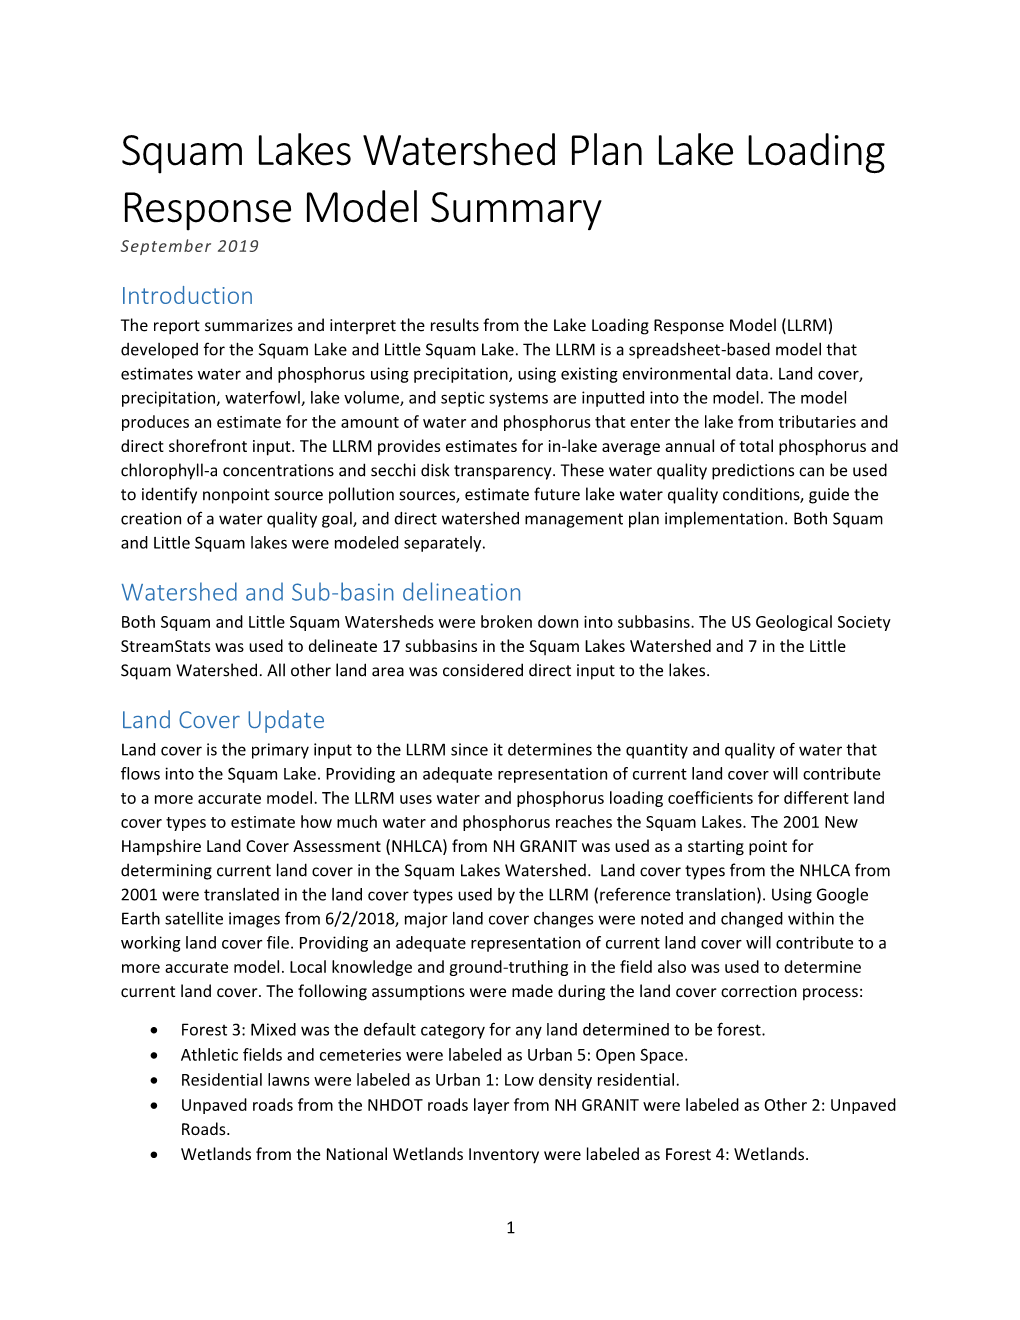 Squam Lakes Watershed Plan Lake Loading Response Model Summary September 2019